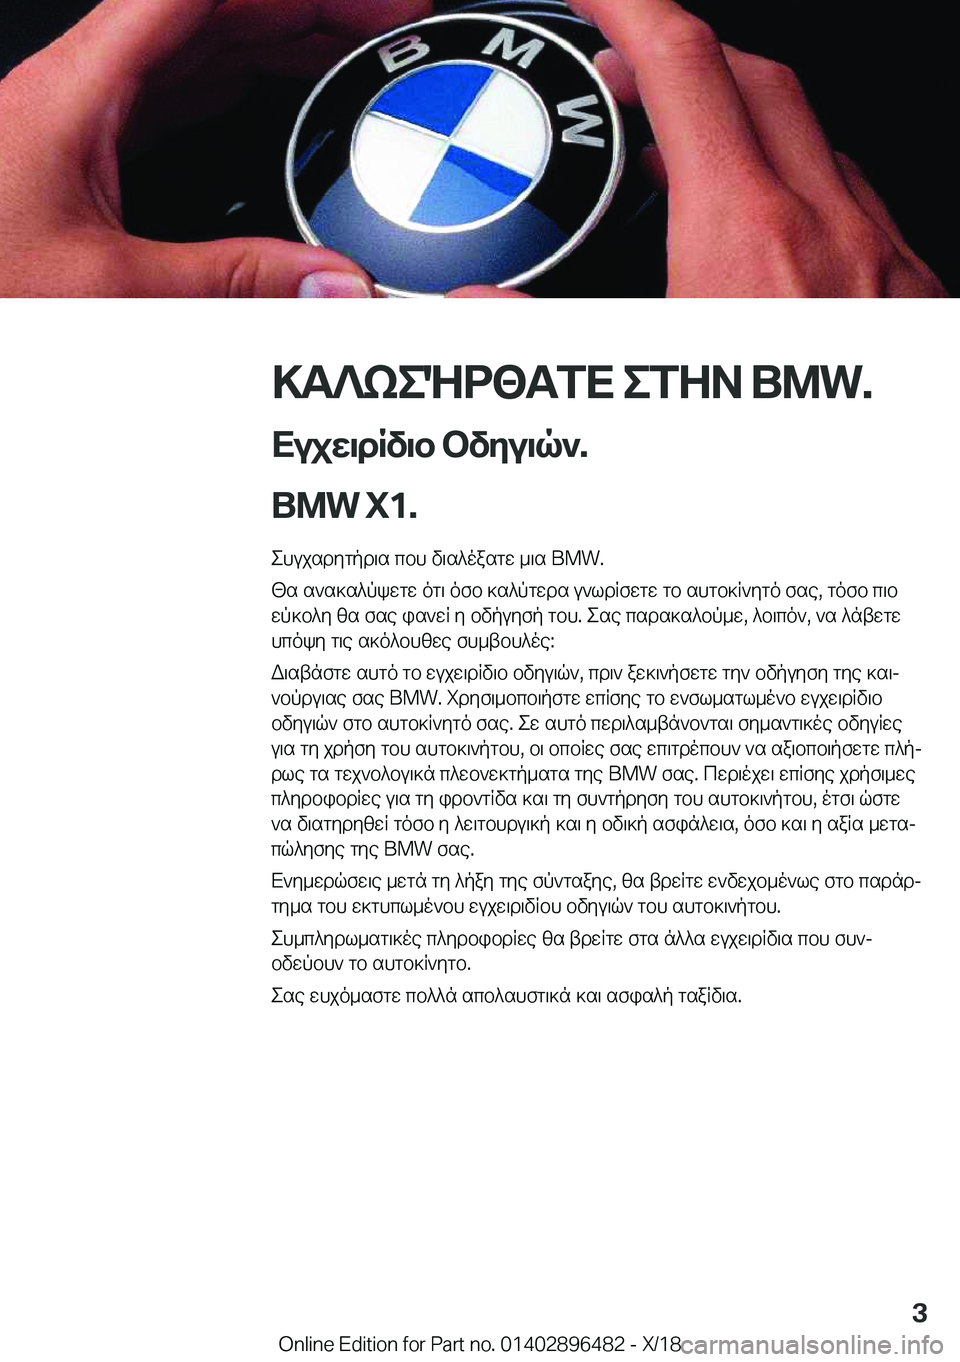 BMW X1 2019  ΟΔΗΓΌΣ ΧΡΉΣΗΣ (in Greek) >T?keNd<TfX�efZA��B�M�W�.
Xujw\dRv\b�bvyu\q`�.
�B�M�W��X�1�. ehujsdygpd\s�cbh�v\s^oasgw�_\s��B�M�W�.
[s�s`s]s^pkwgw�o